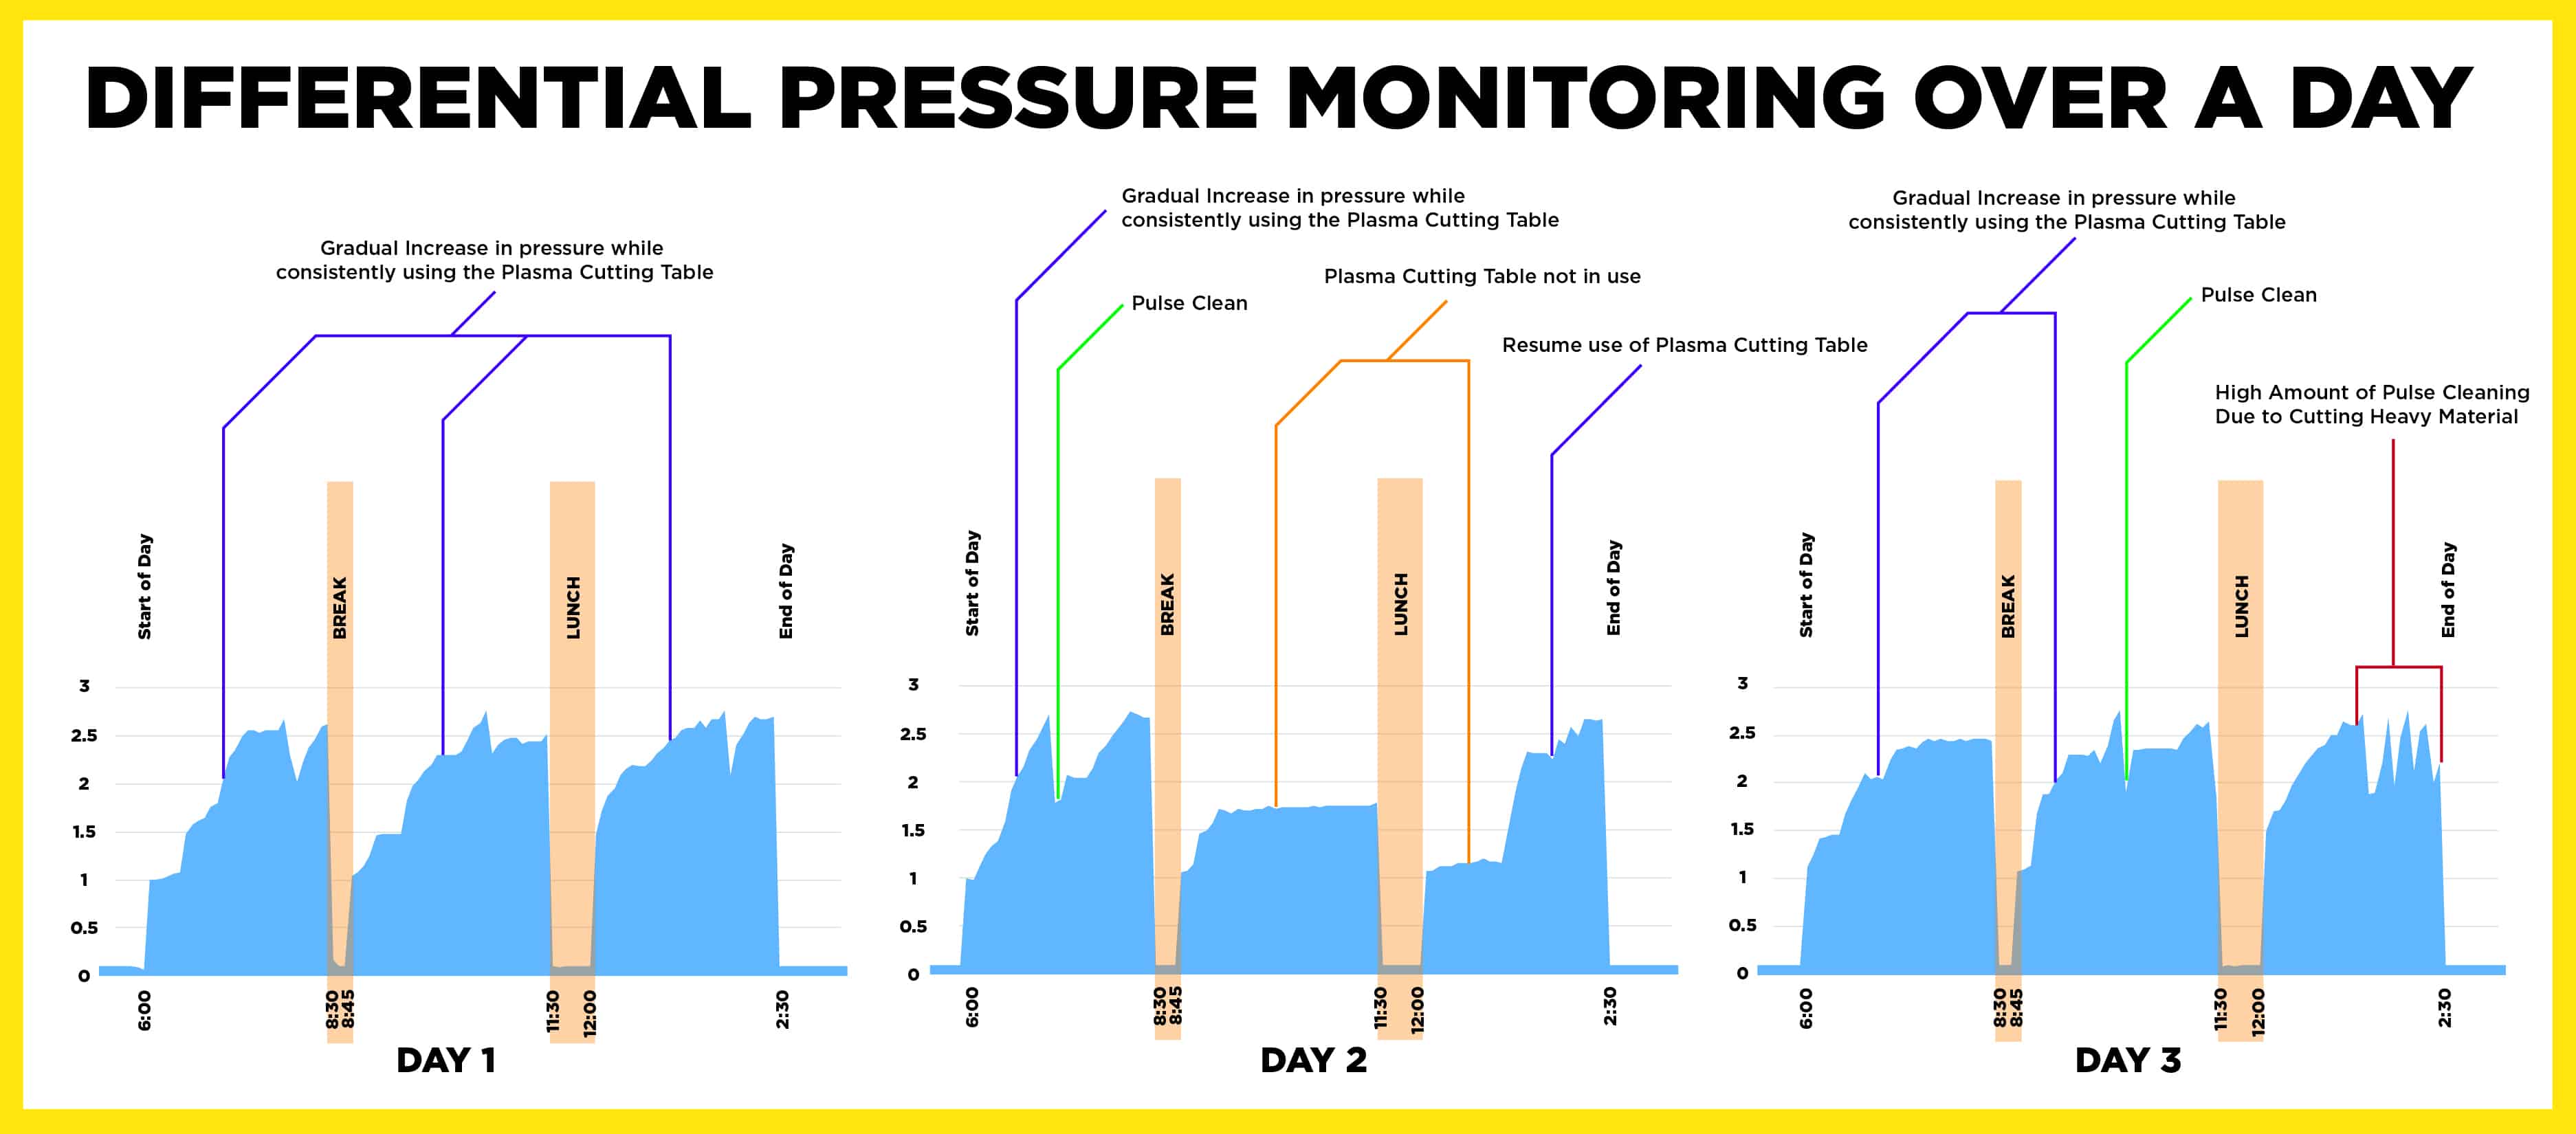 Merv Filter Pressure Drop Chart